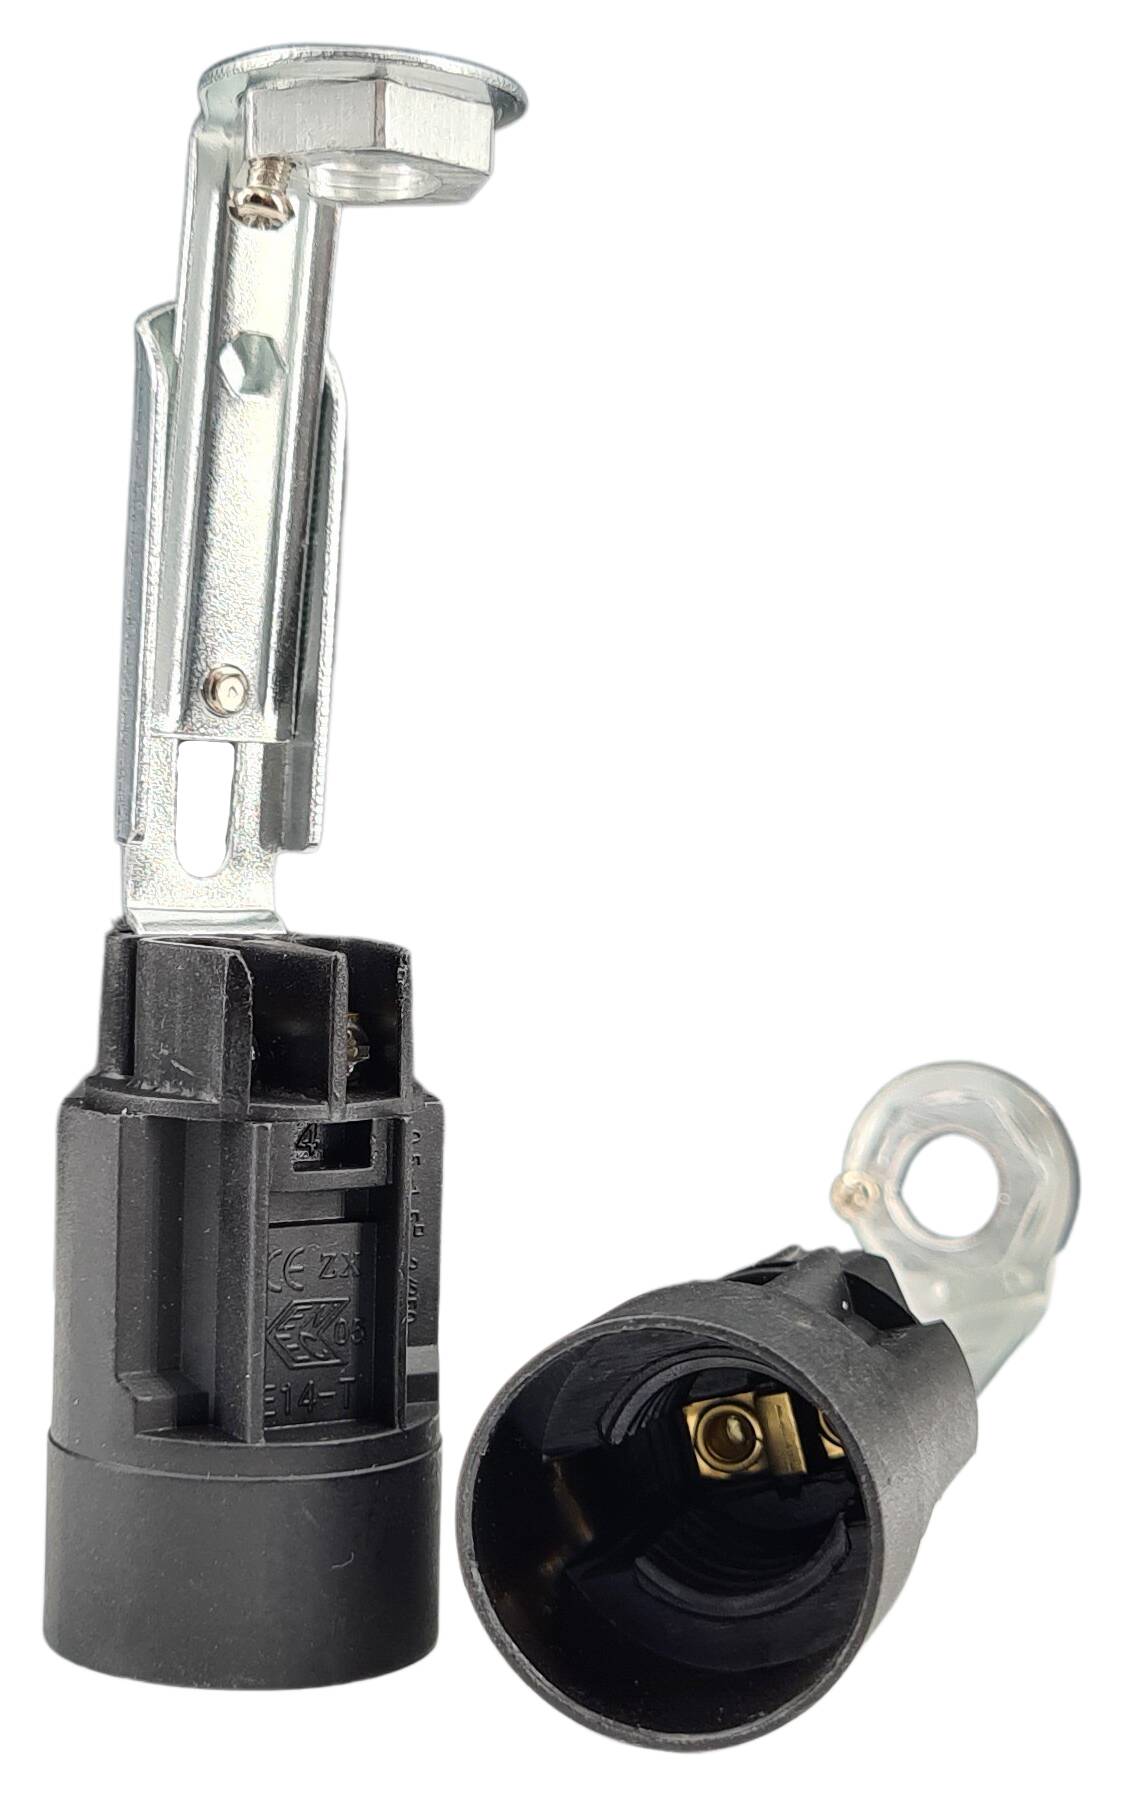 E14 plastic candle lampholder adjustable 80-100 mm M10x1 metal thread